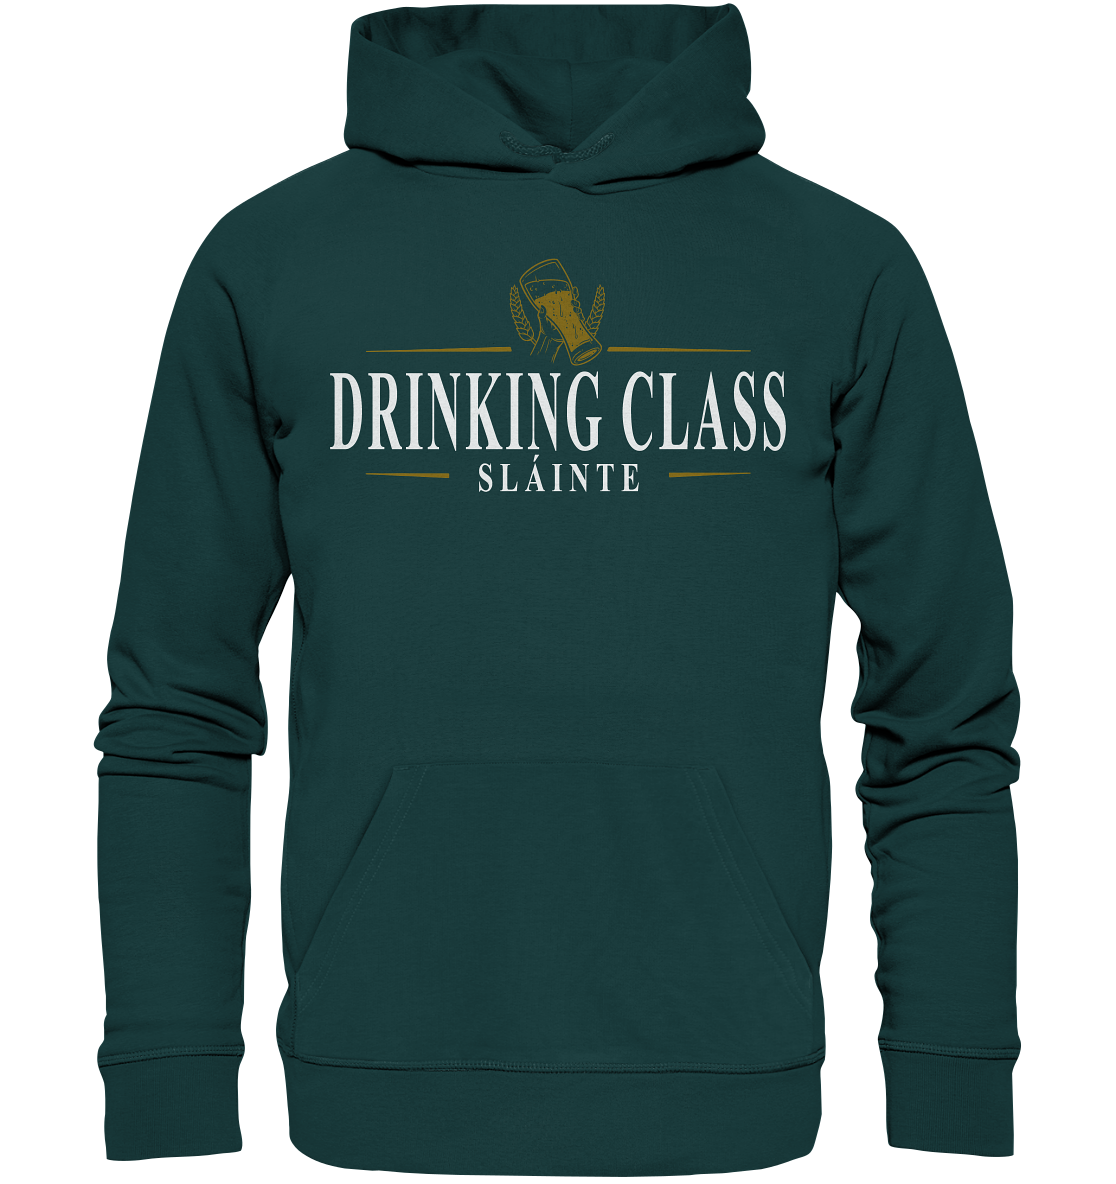 Drinking Class "Sláinte" - Organic Hoodie